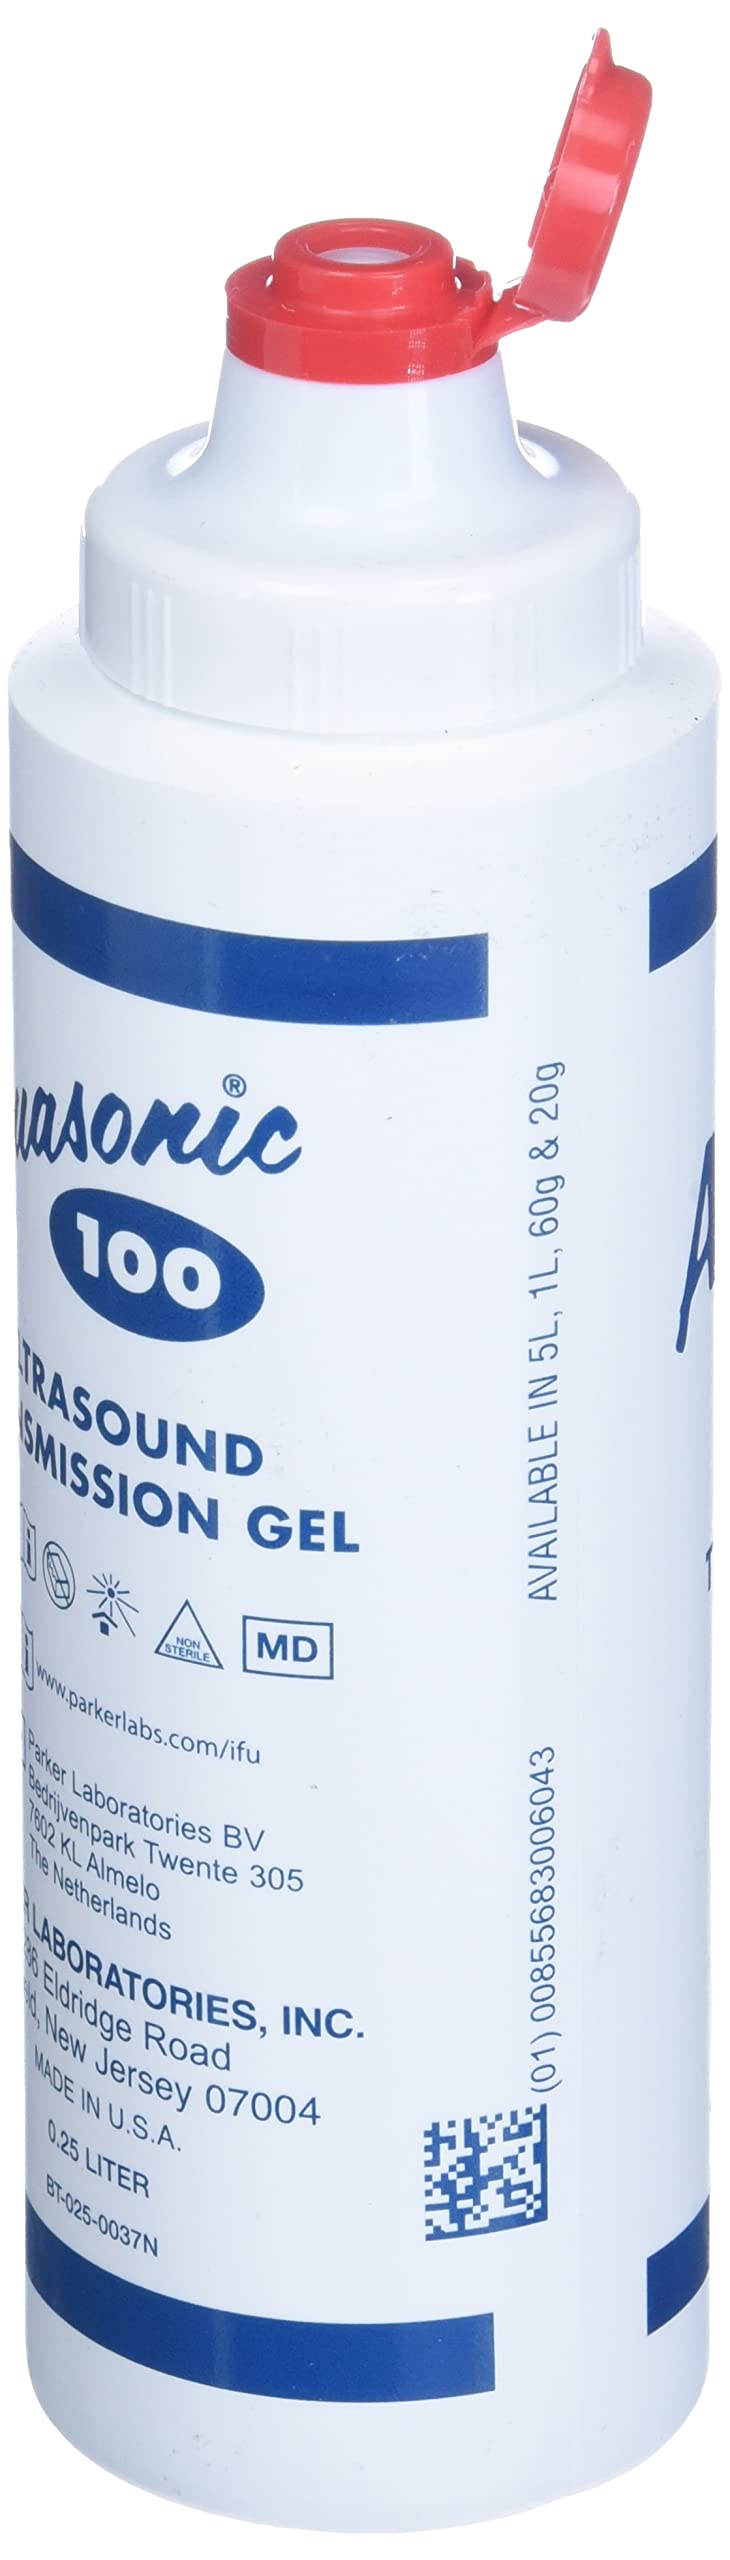 Aquasonic Aquasonic 100 Ultrasonic Gel, 250ml (8.5 Ounce) Dispenser - Each, 8.45 Fl Ounce